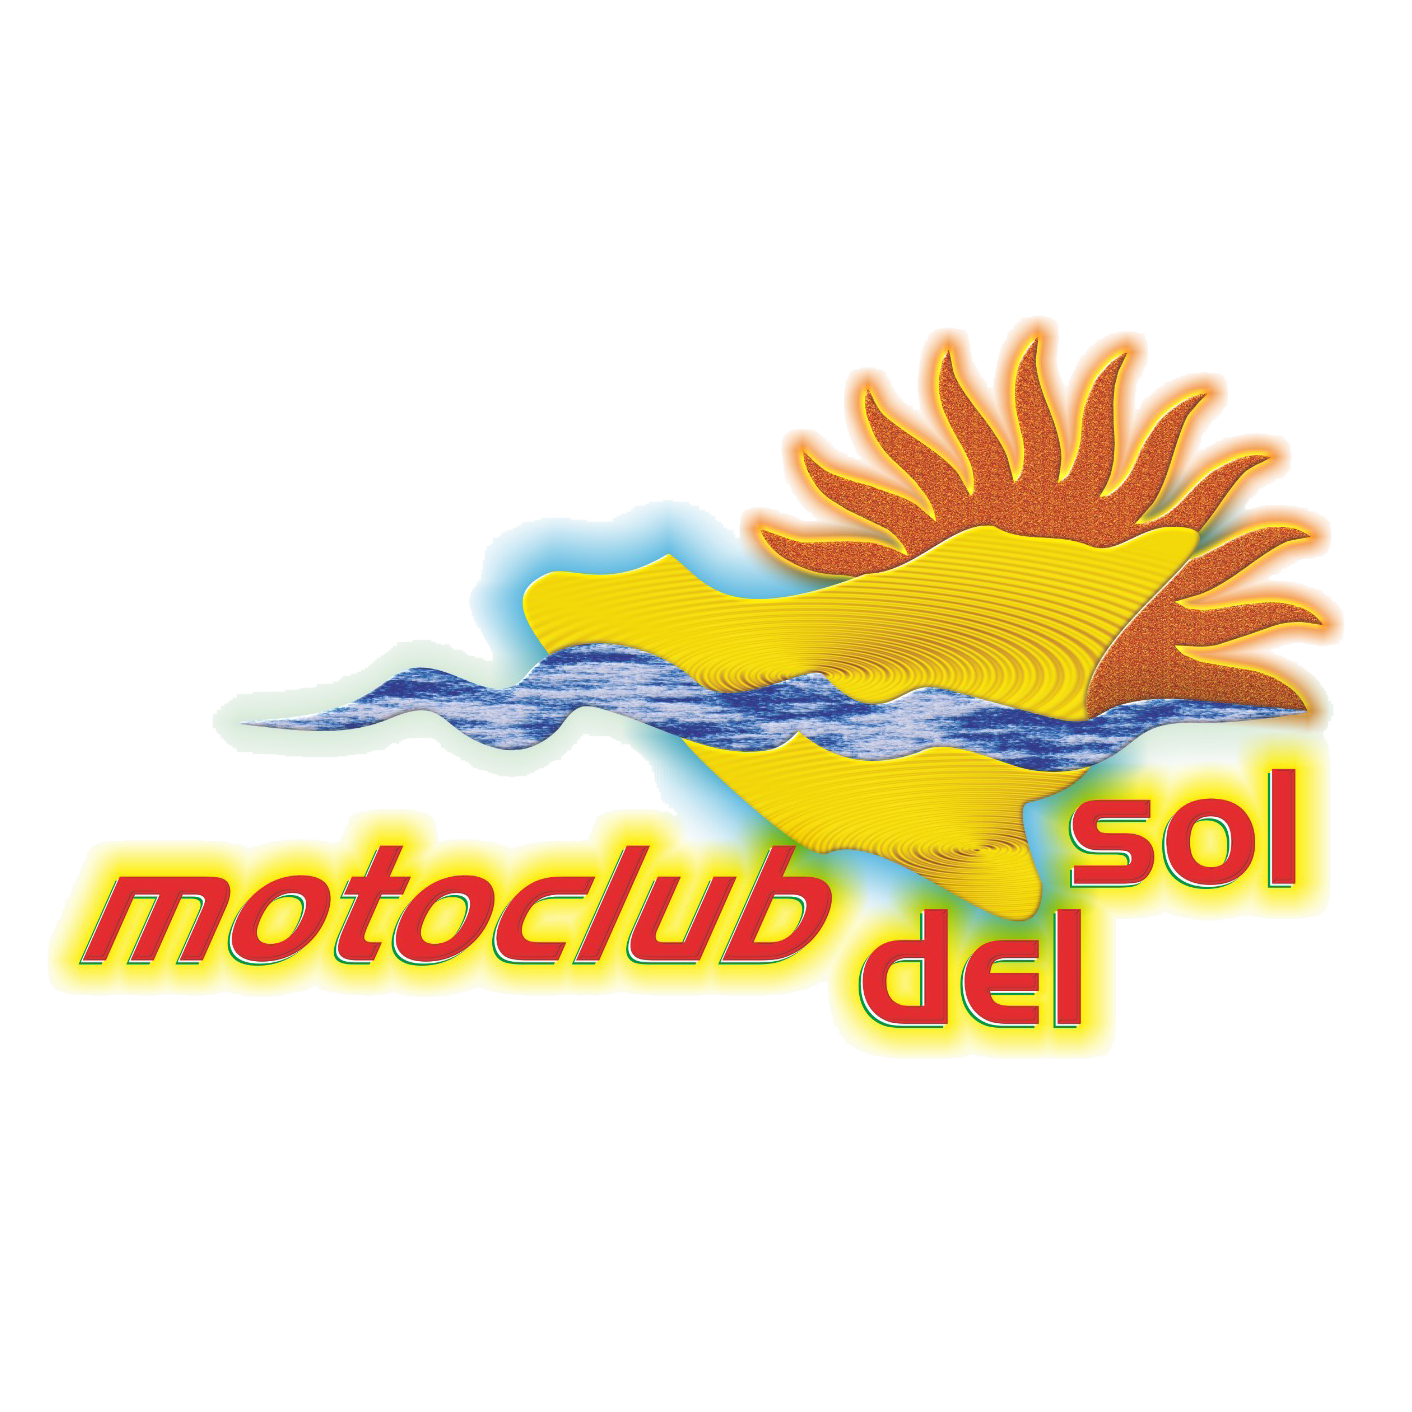 Rciofi-motoclub-del-sol